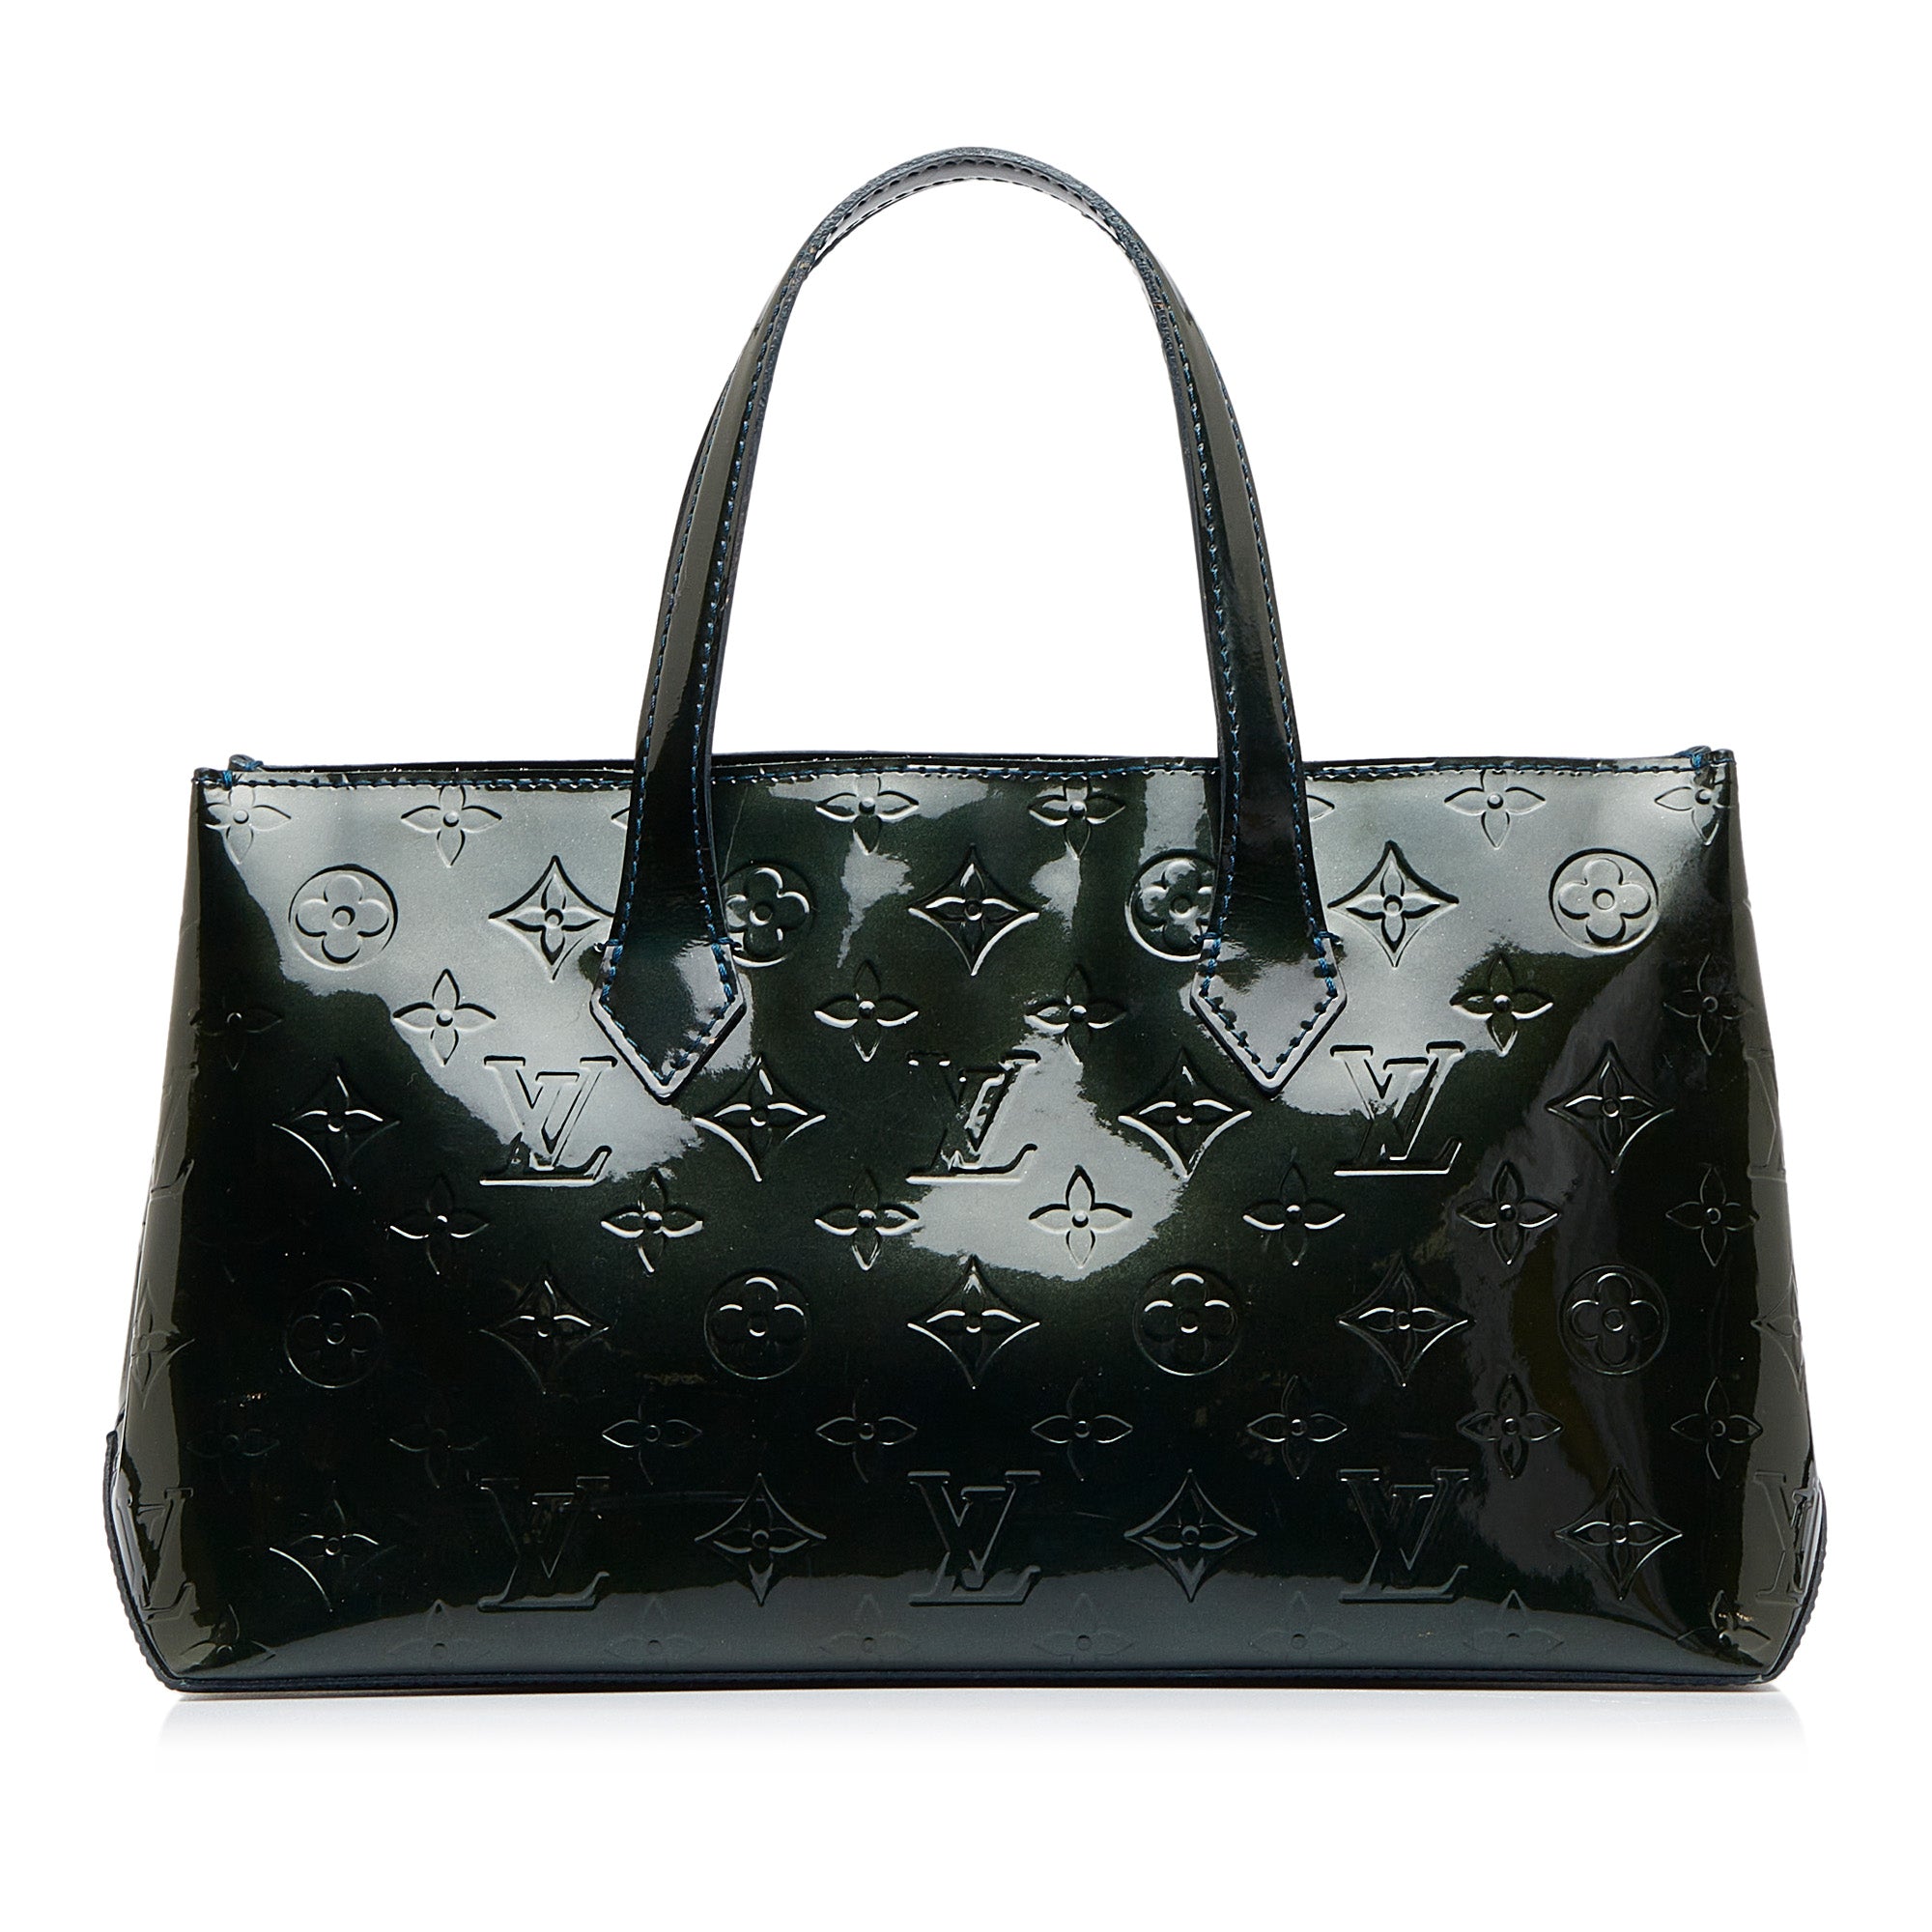 Green Louis Vuitton Vernis Bellevue PM Handbag